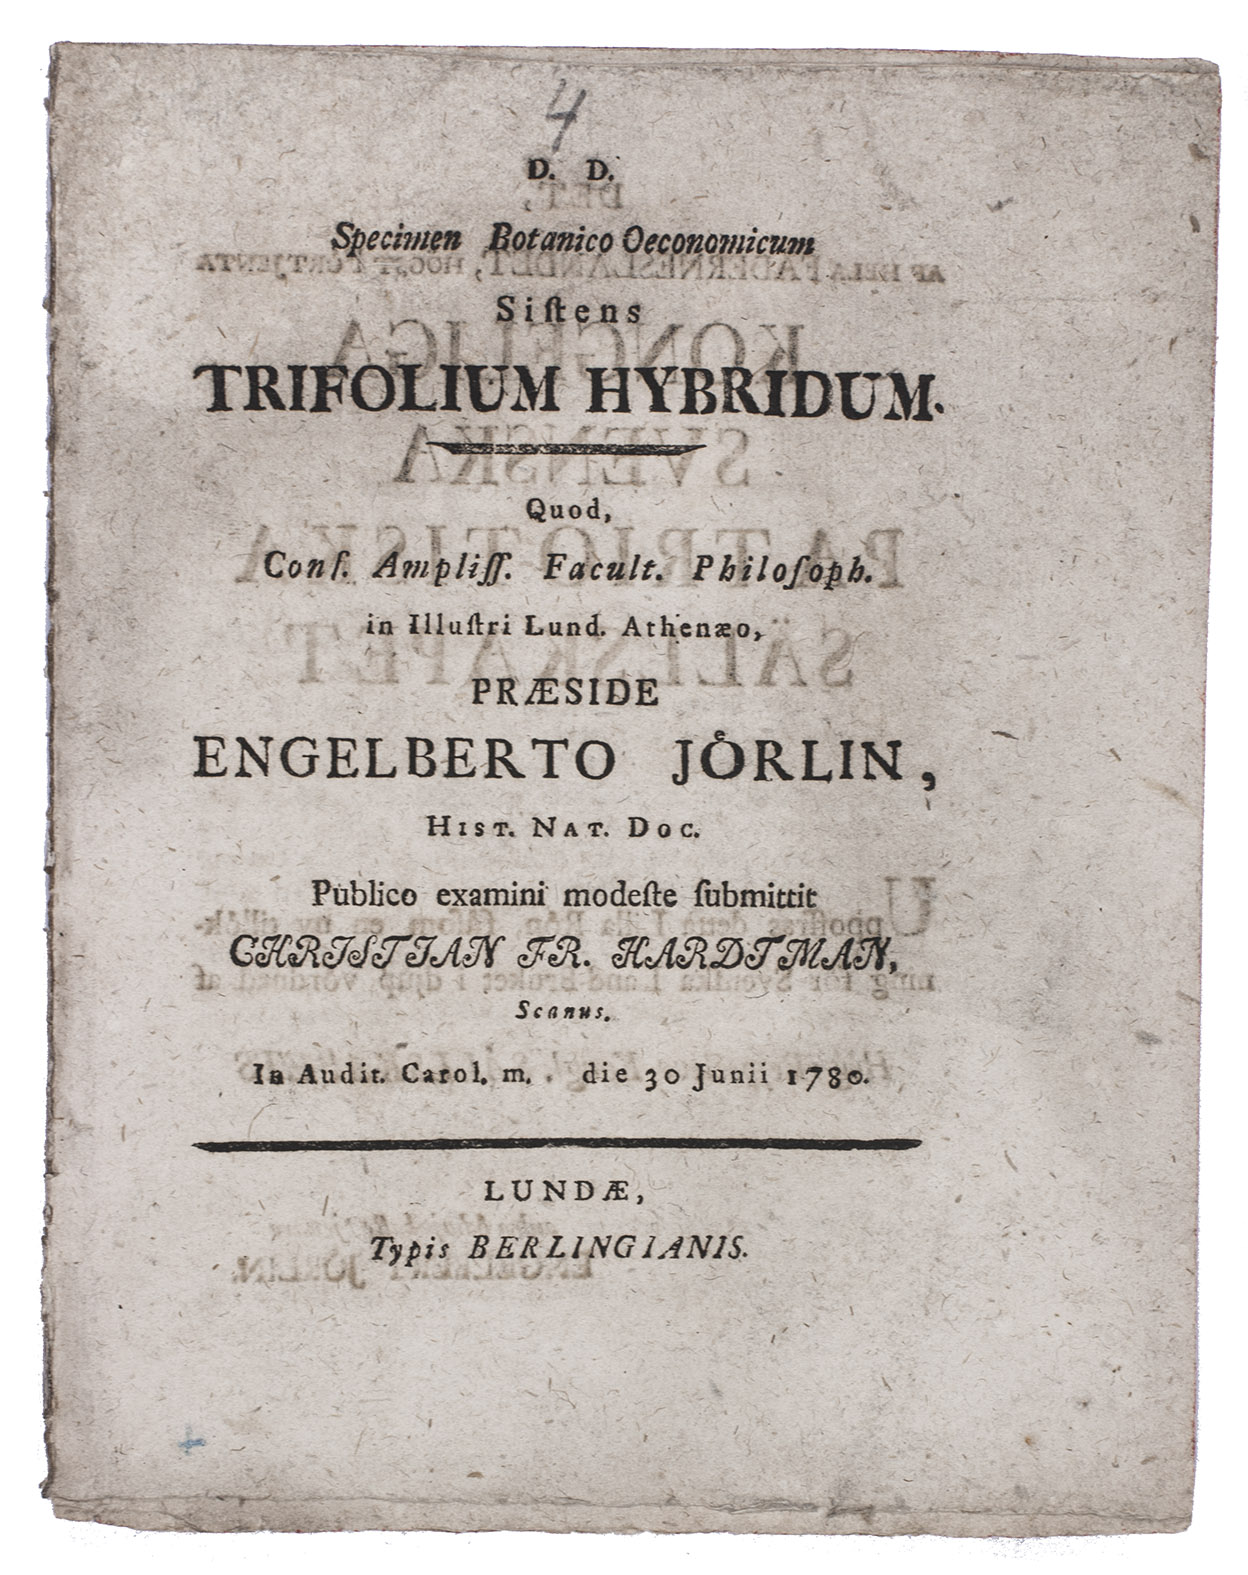 HARDTMAN, Christian Fr. and Engelbert JRLIN. - Specimen botanico oeconomicum sistens trifolium hybridum.Lund, Berling, 1780. 4to. With a woodcut tailpiece. Disbound.